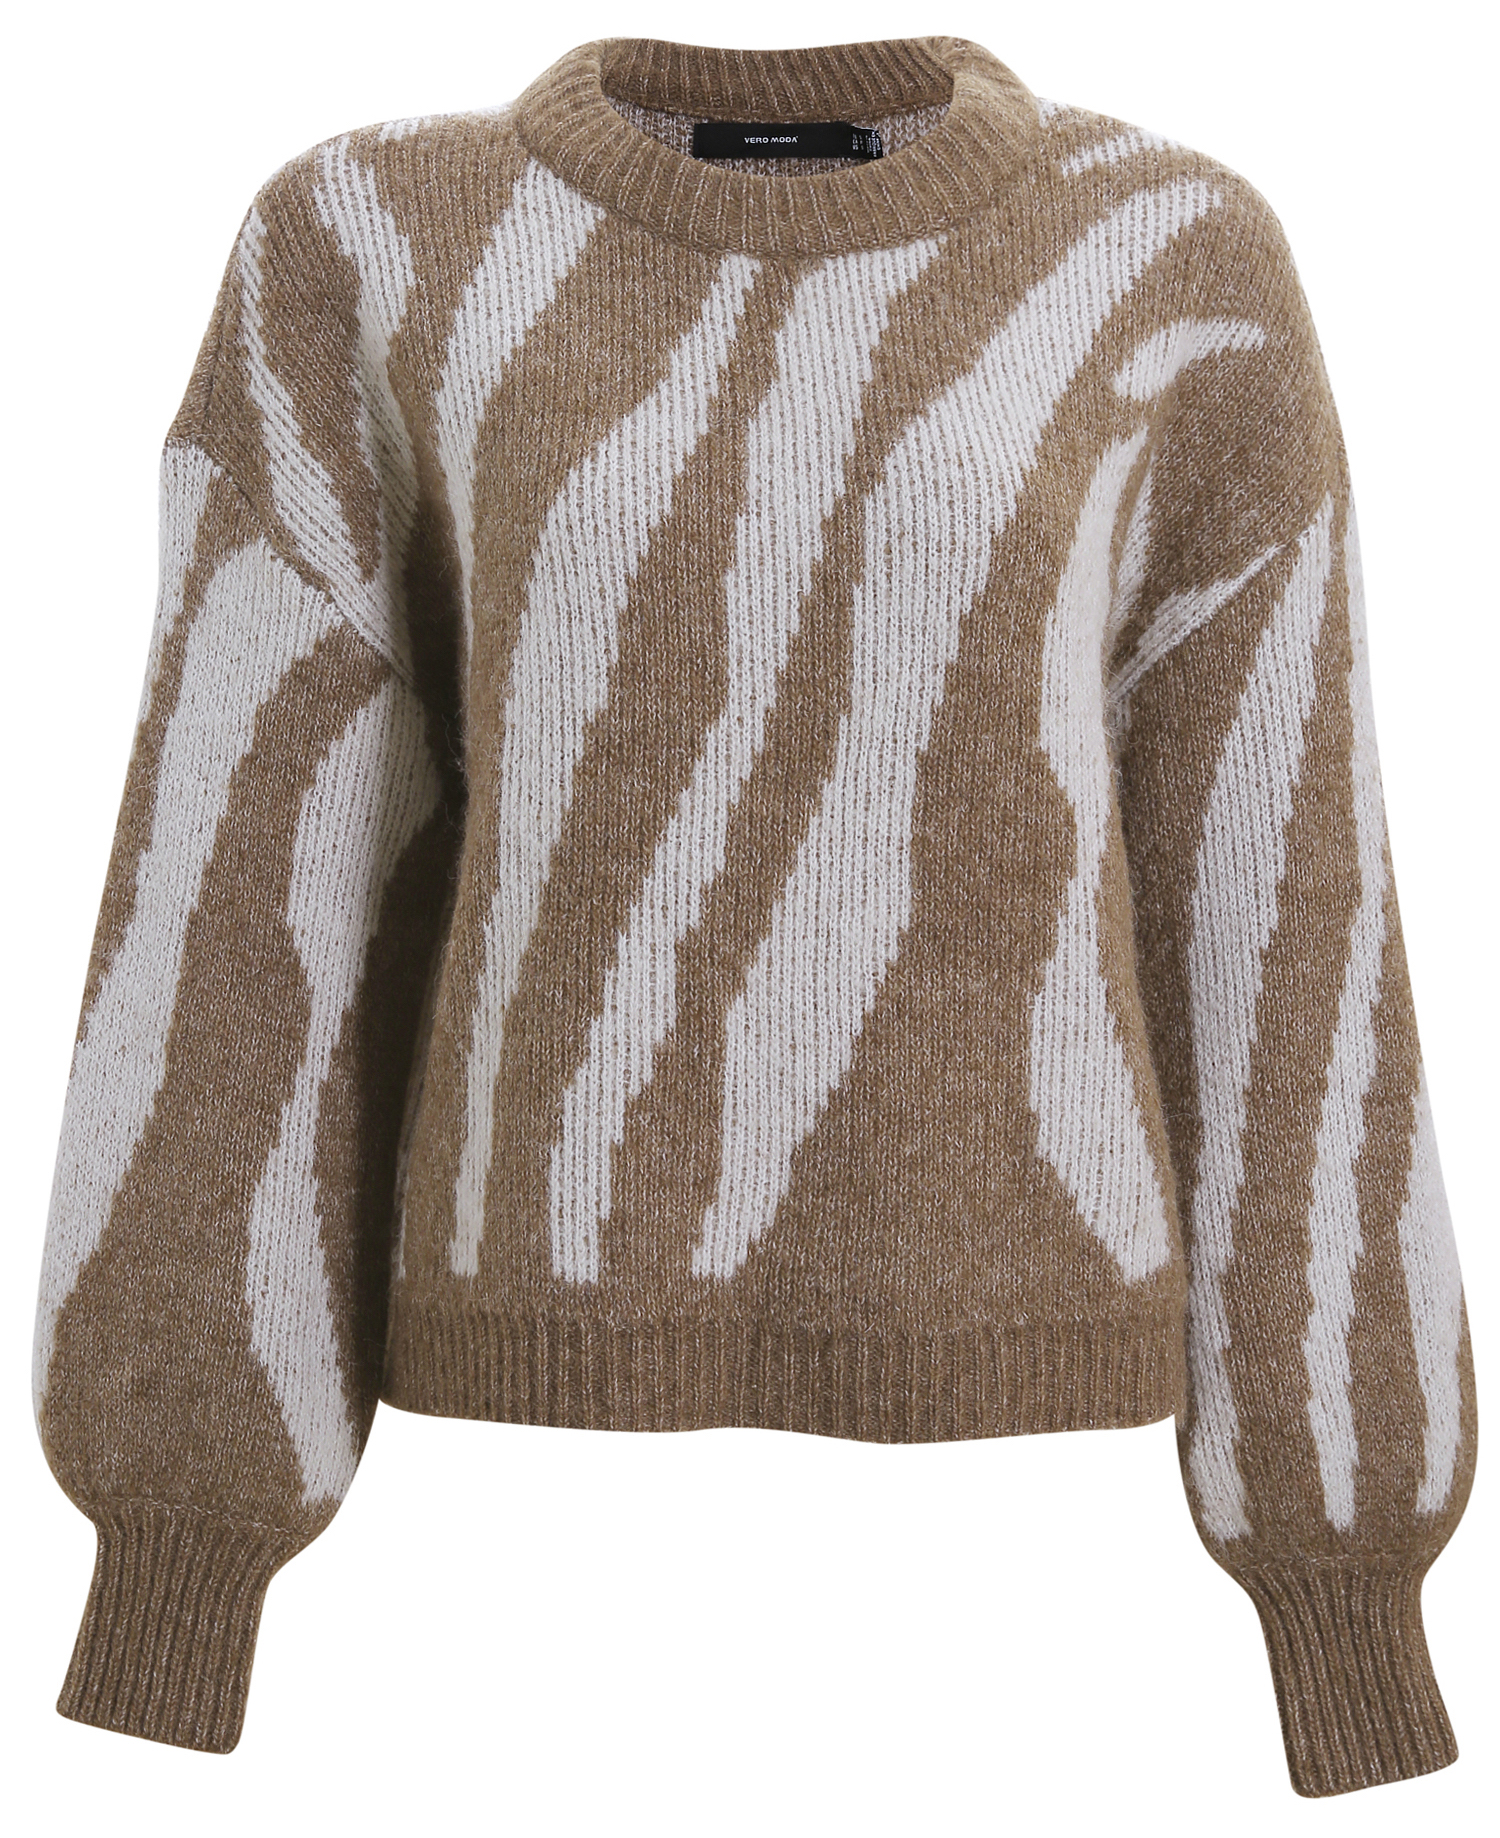 Swirl Pattern Knit Sweater